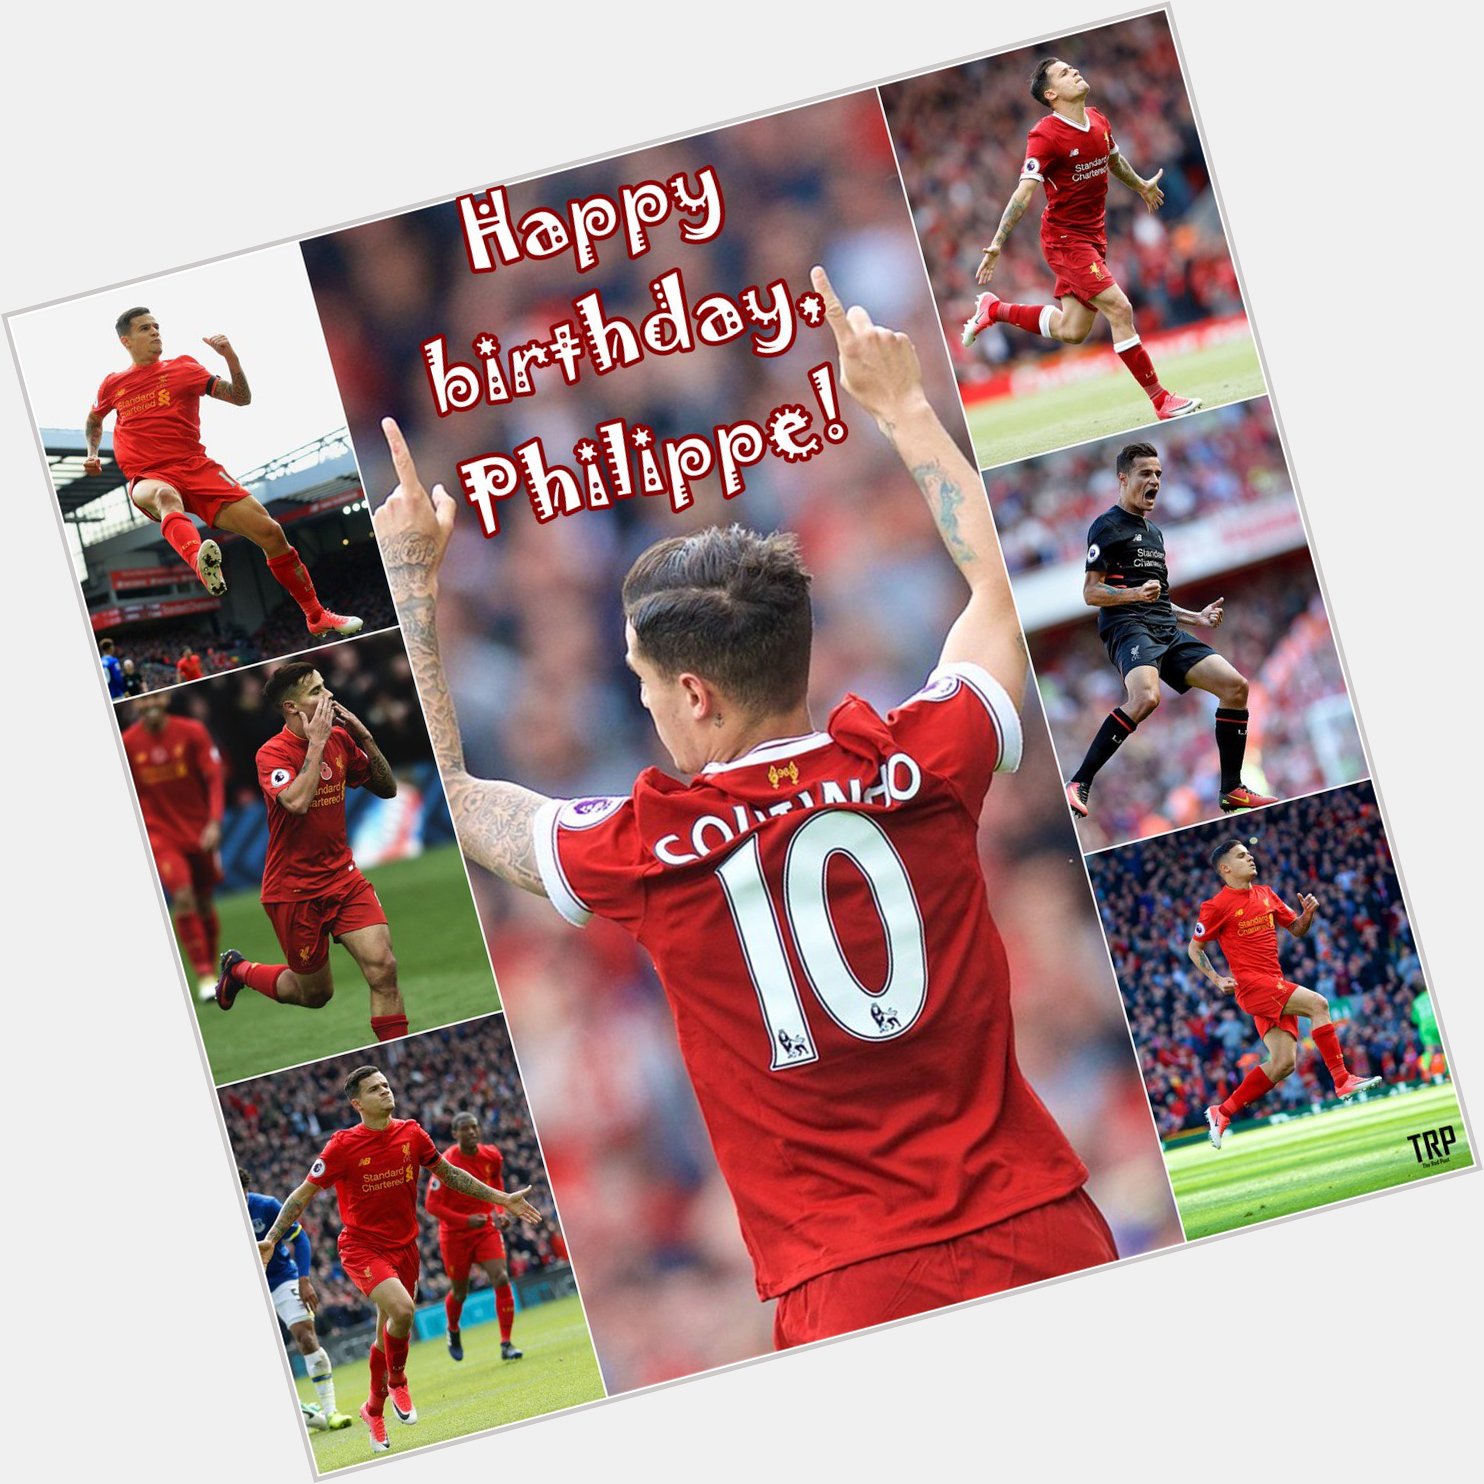 Happy birthday, Mr. Magic   Philippe Coutinho turns 25 today! 